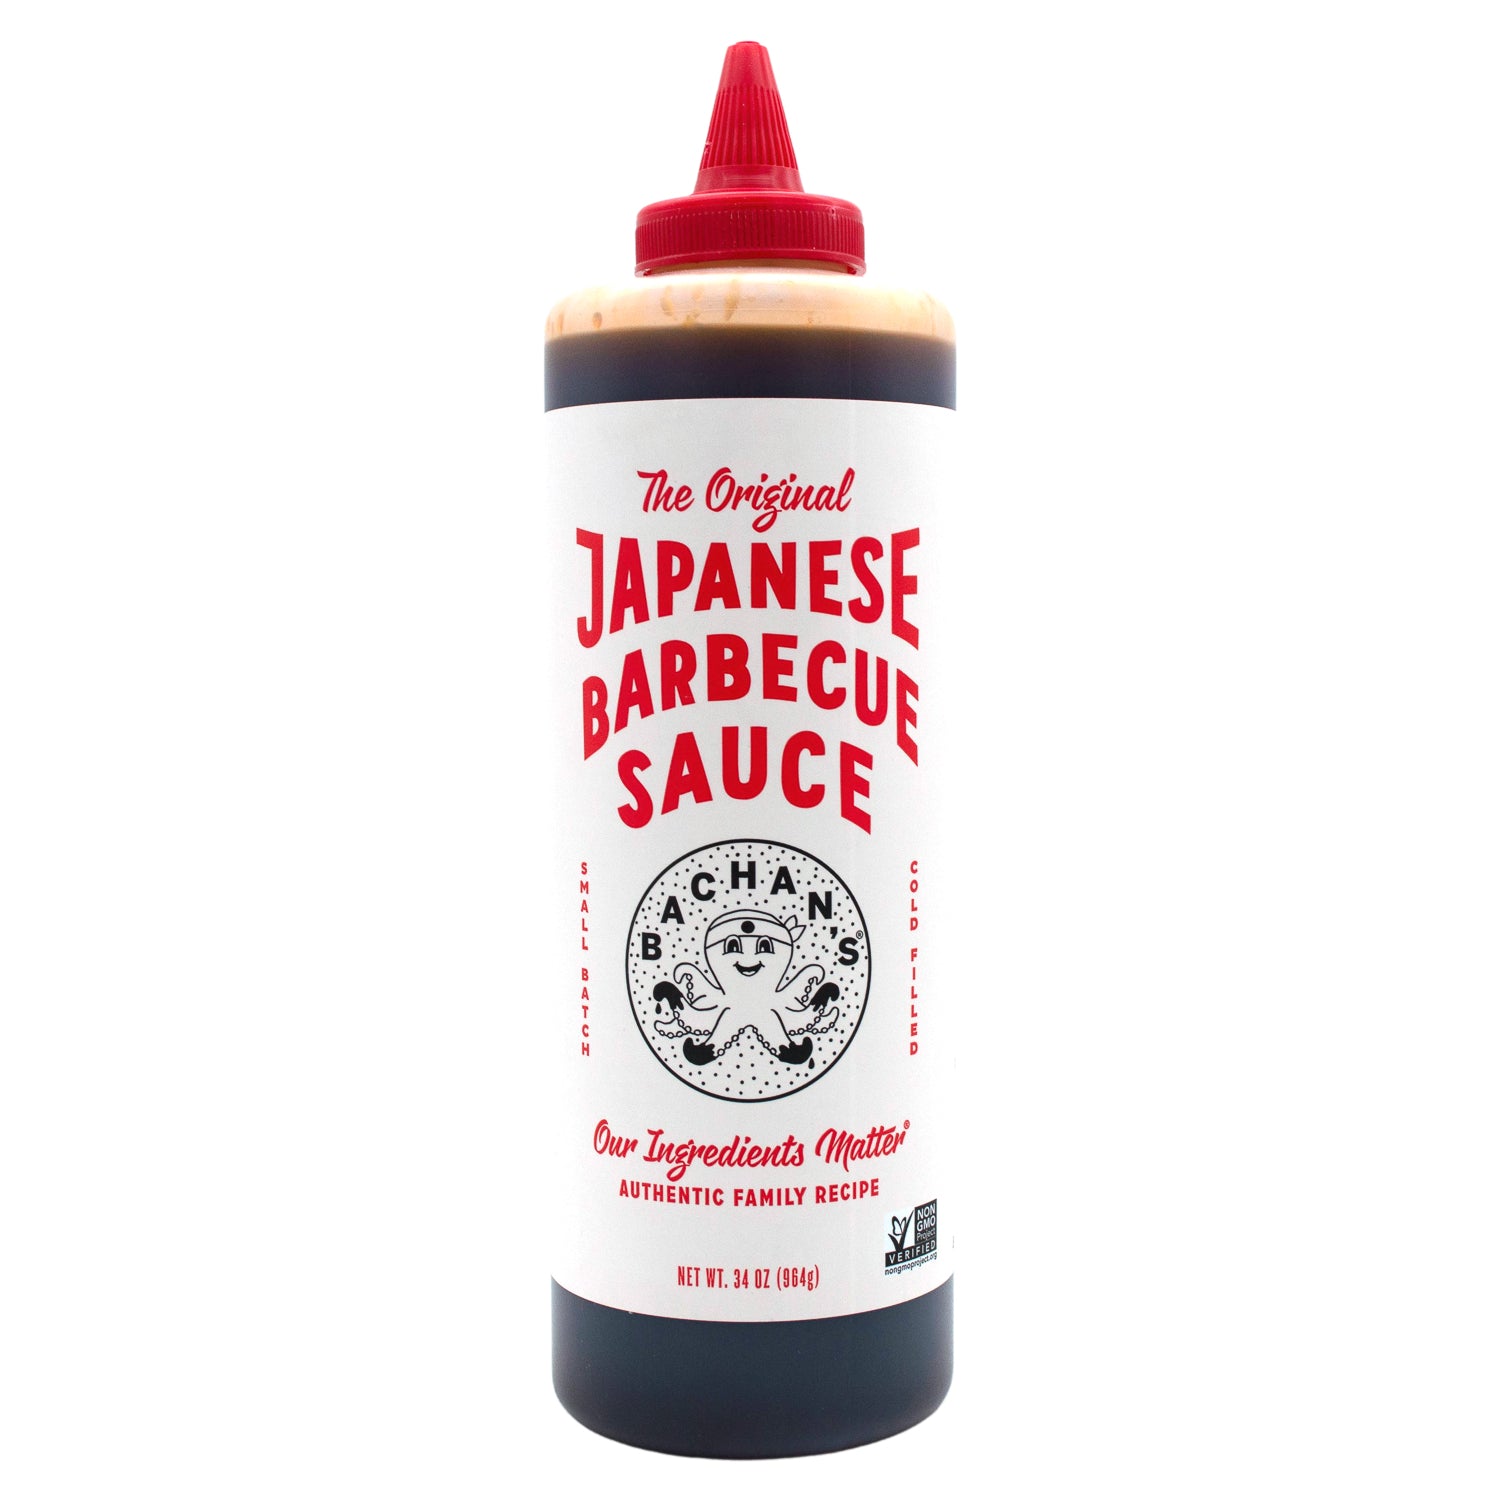 Bachan's Japanese Barbecue Sauce Bachan's Original 34 Ounce 